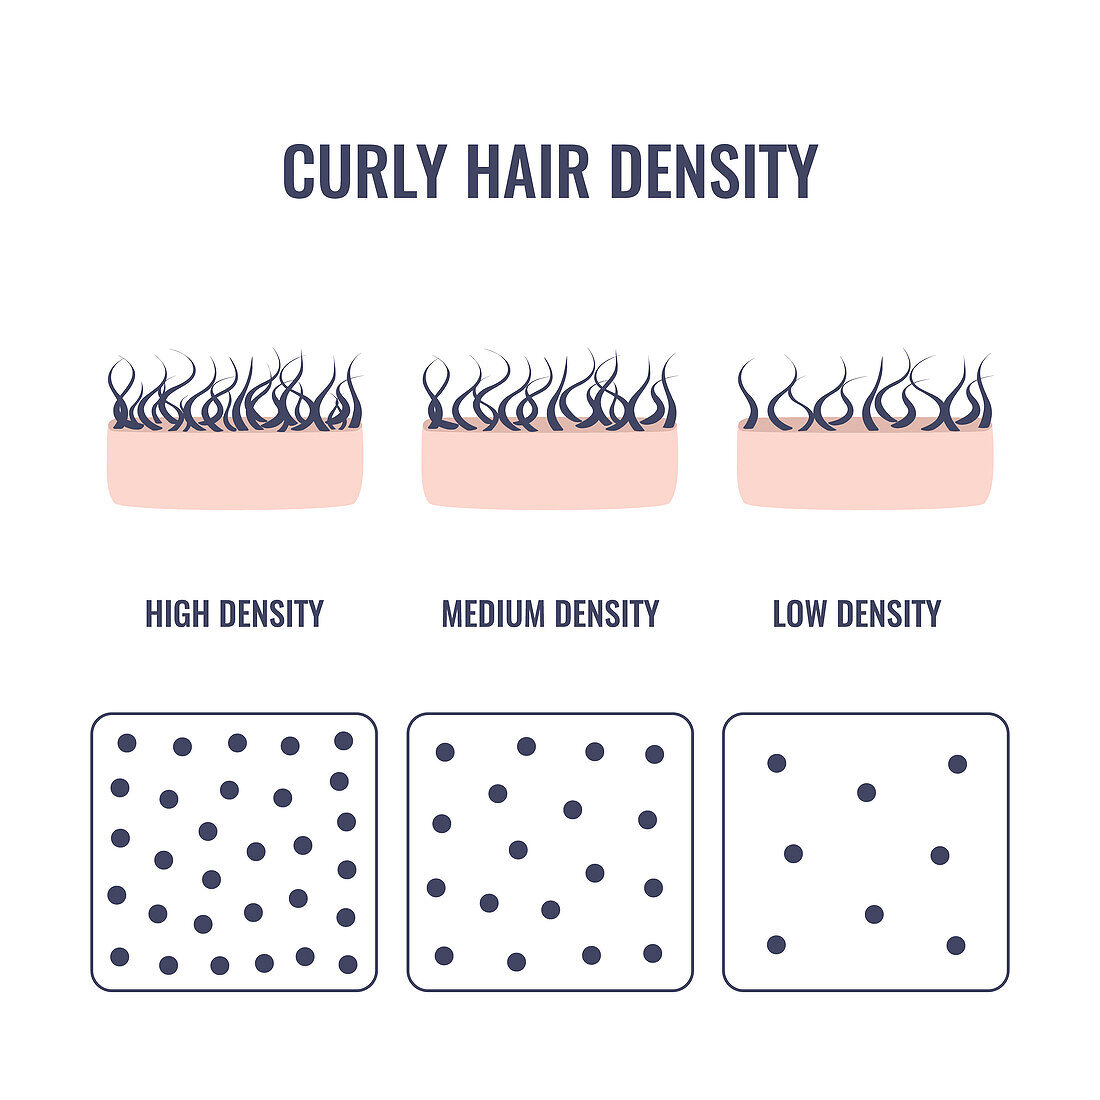 Curly hair density,